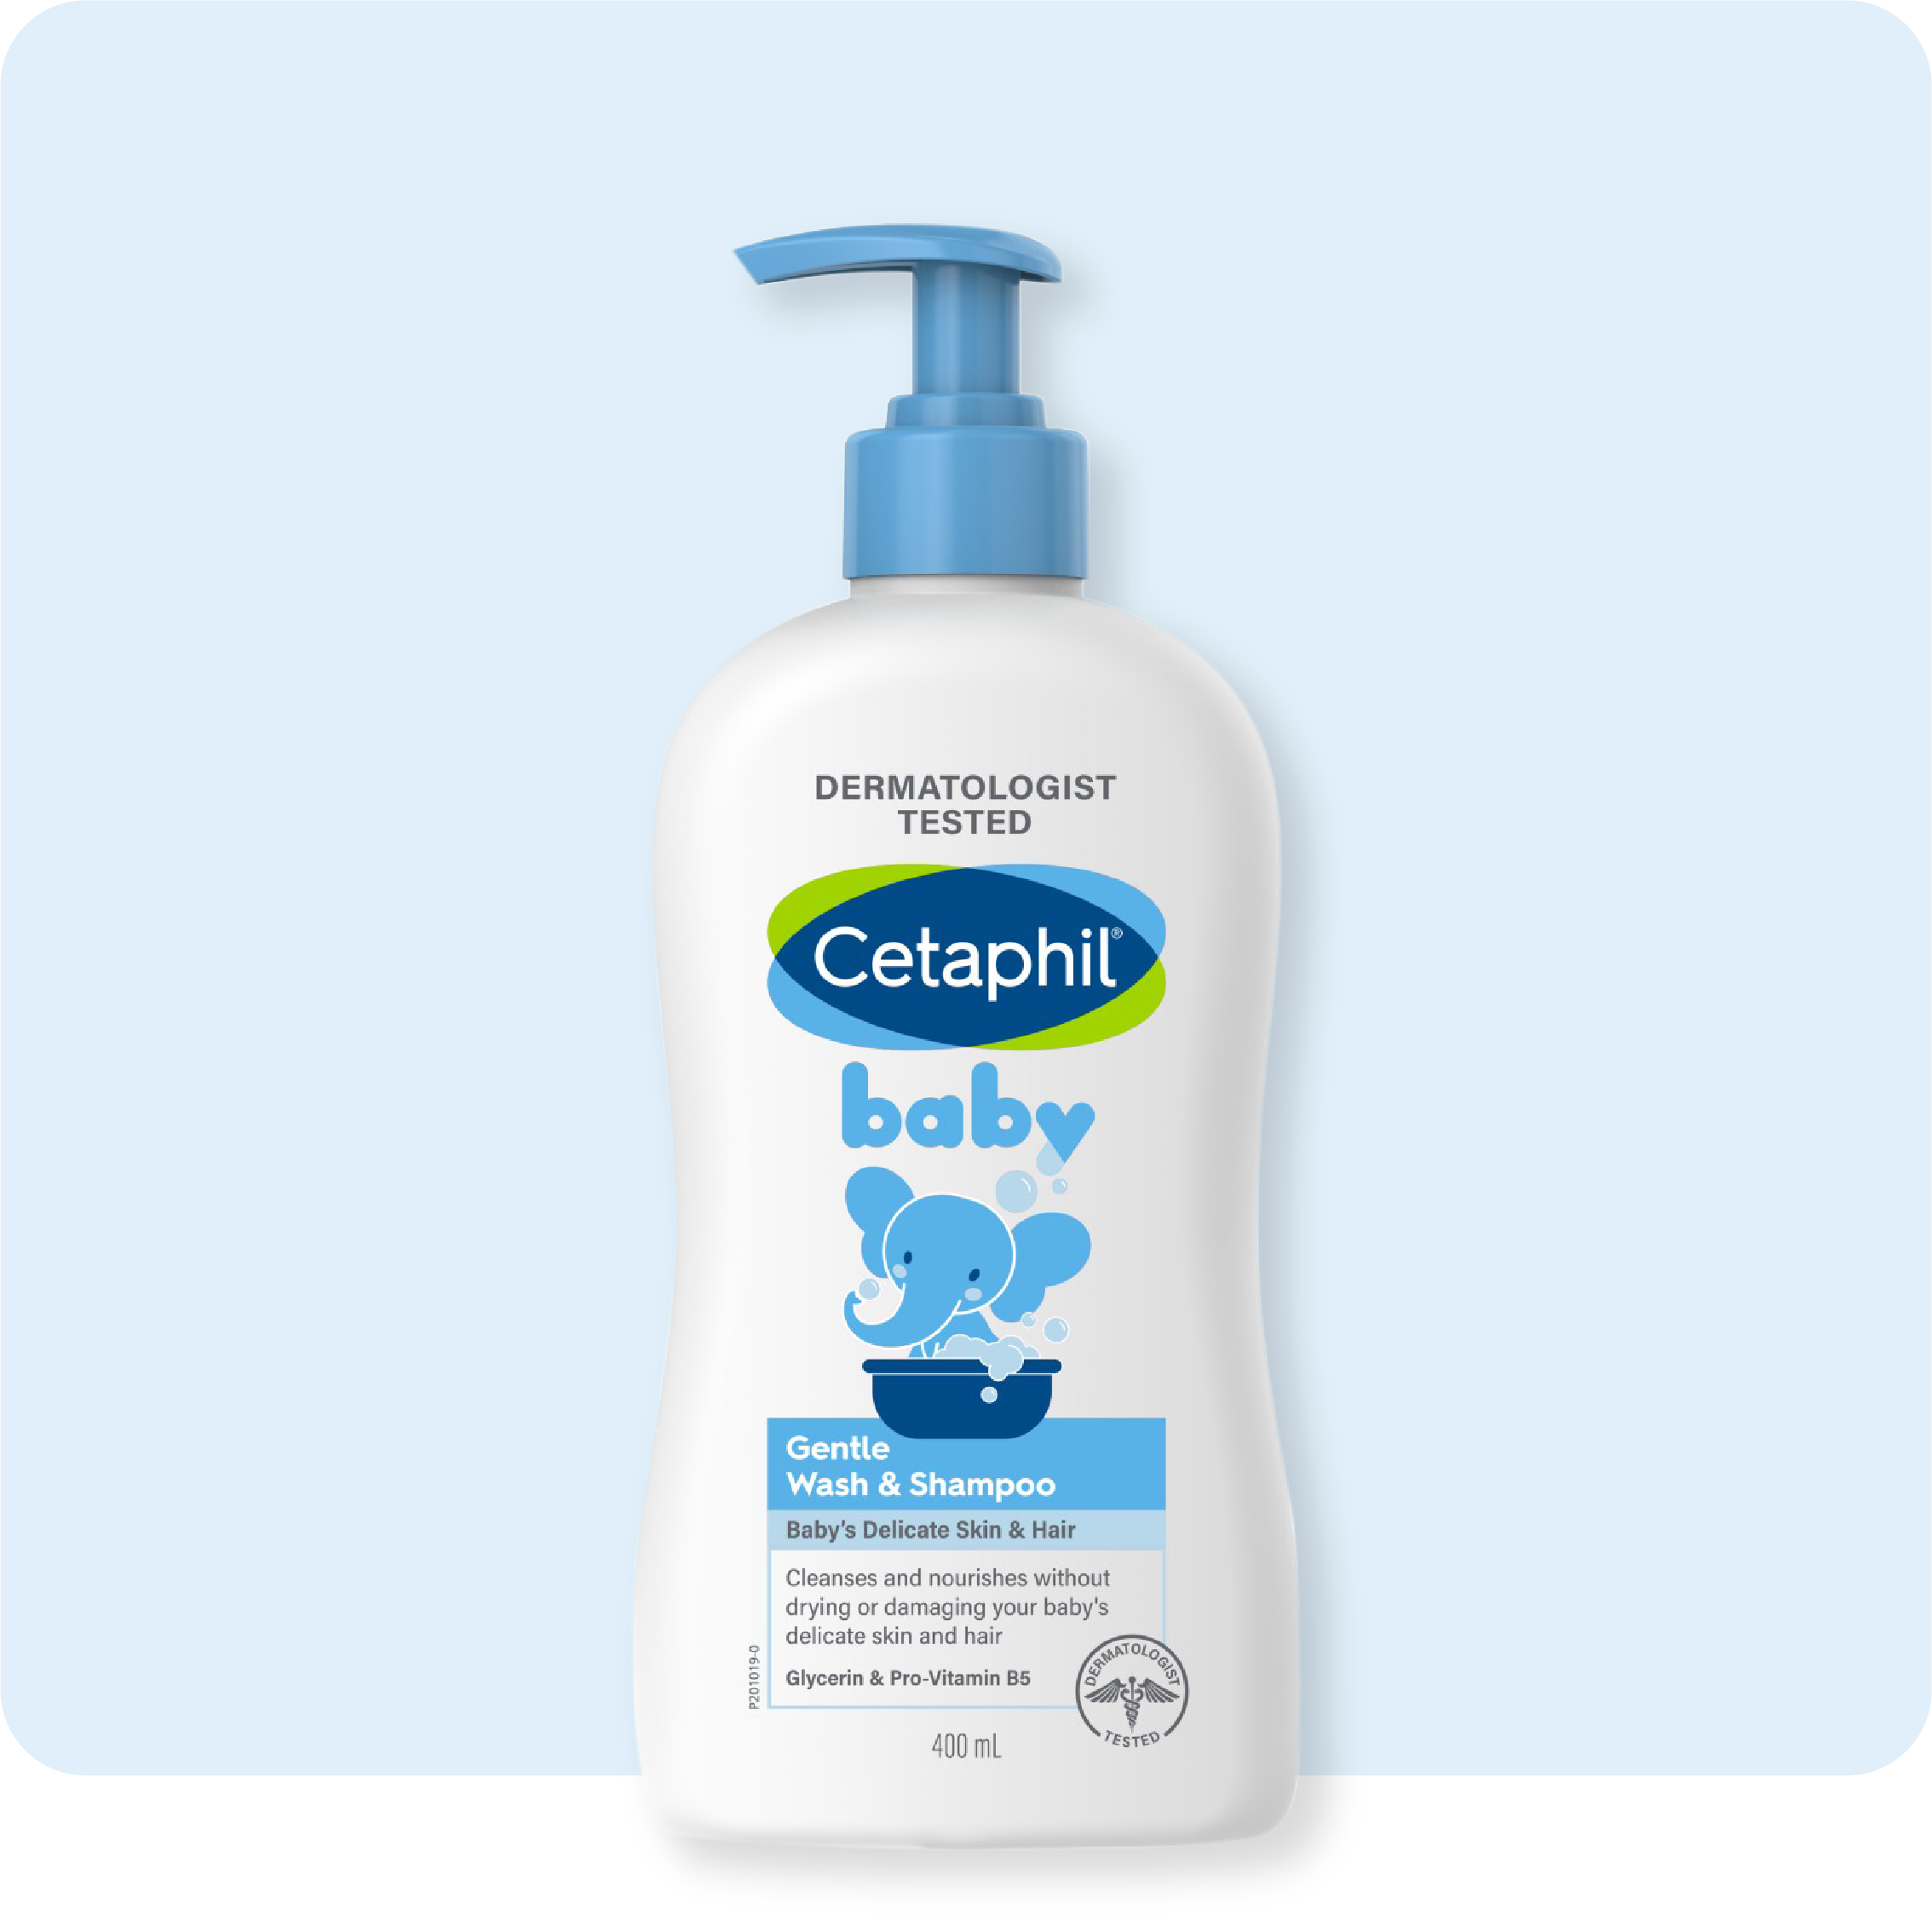 Make Bathtime Tear-Free with Cetaphil Baby Gentle Wash & Shampoo | Cetaphil